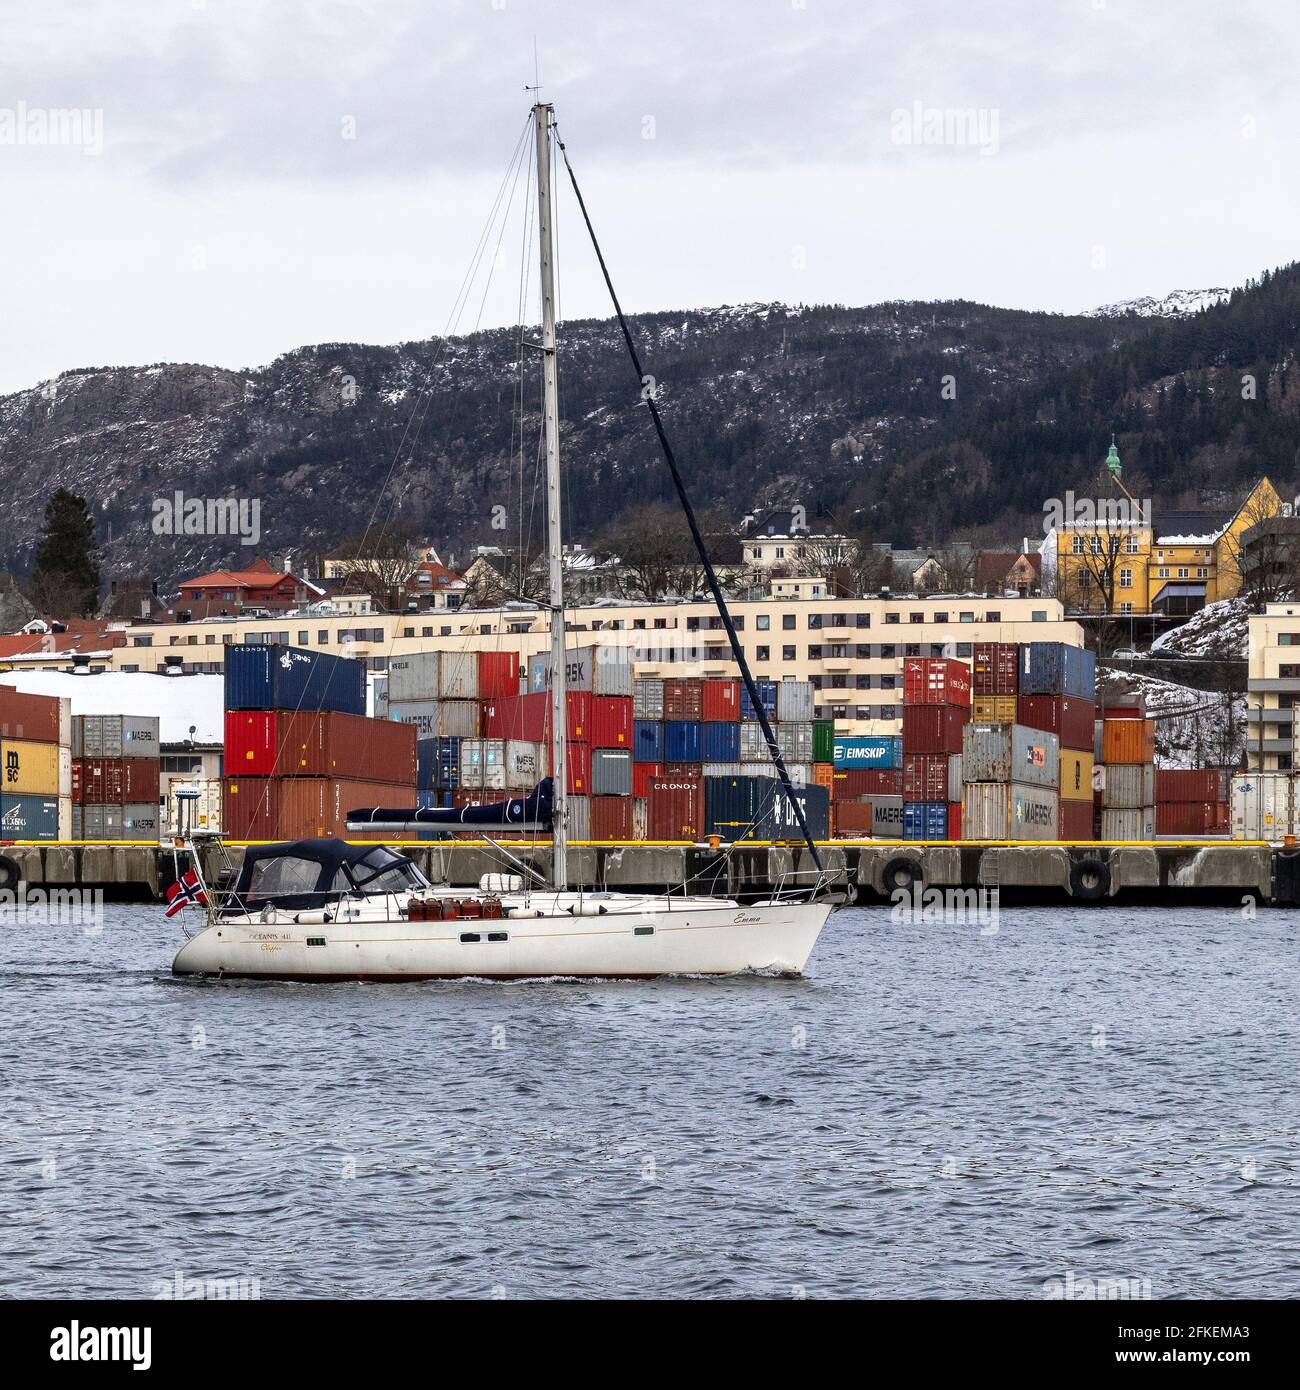 Sailboat Emma at Damsgaardsundet, entering port. Bergen, Norway Stock Photo